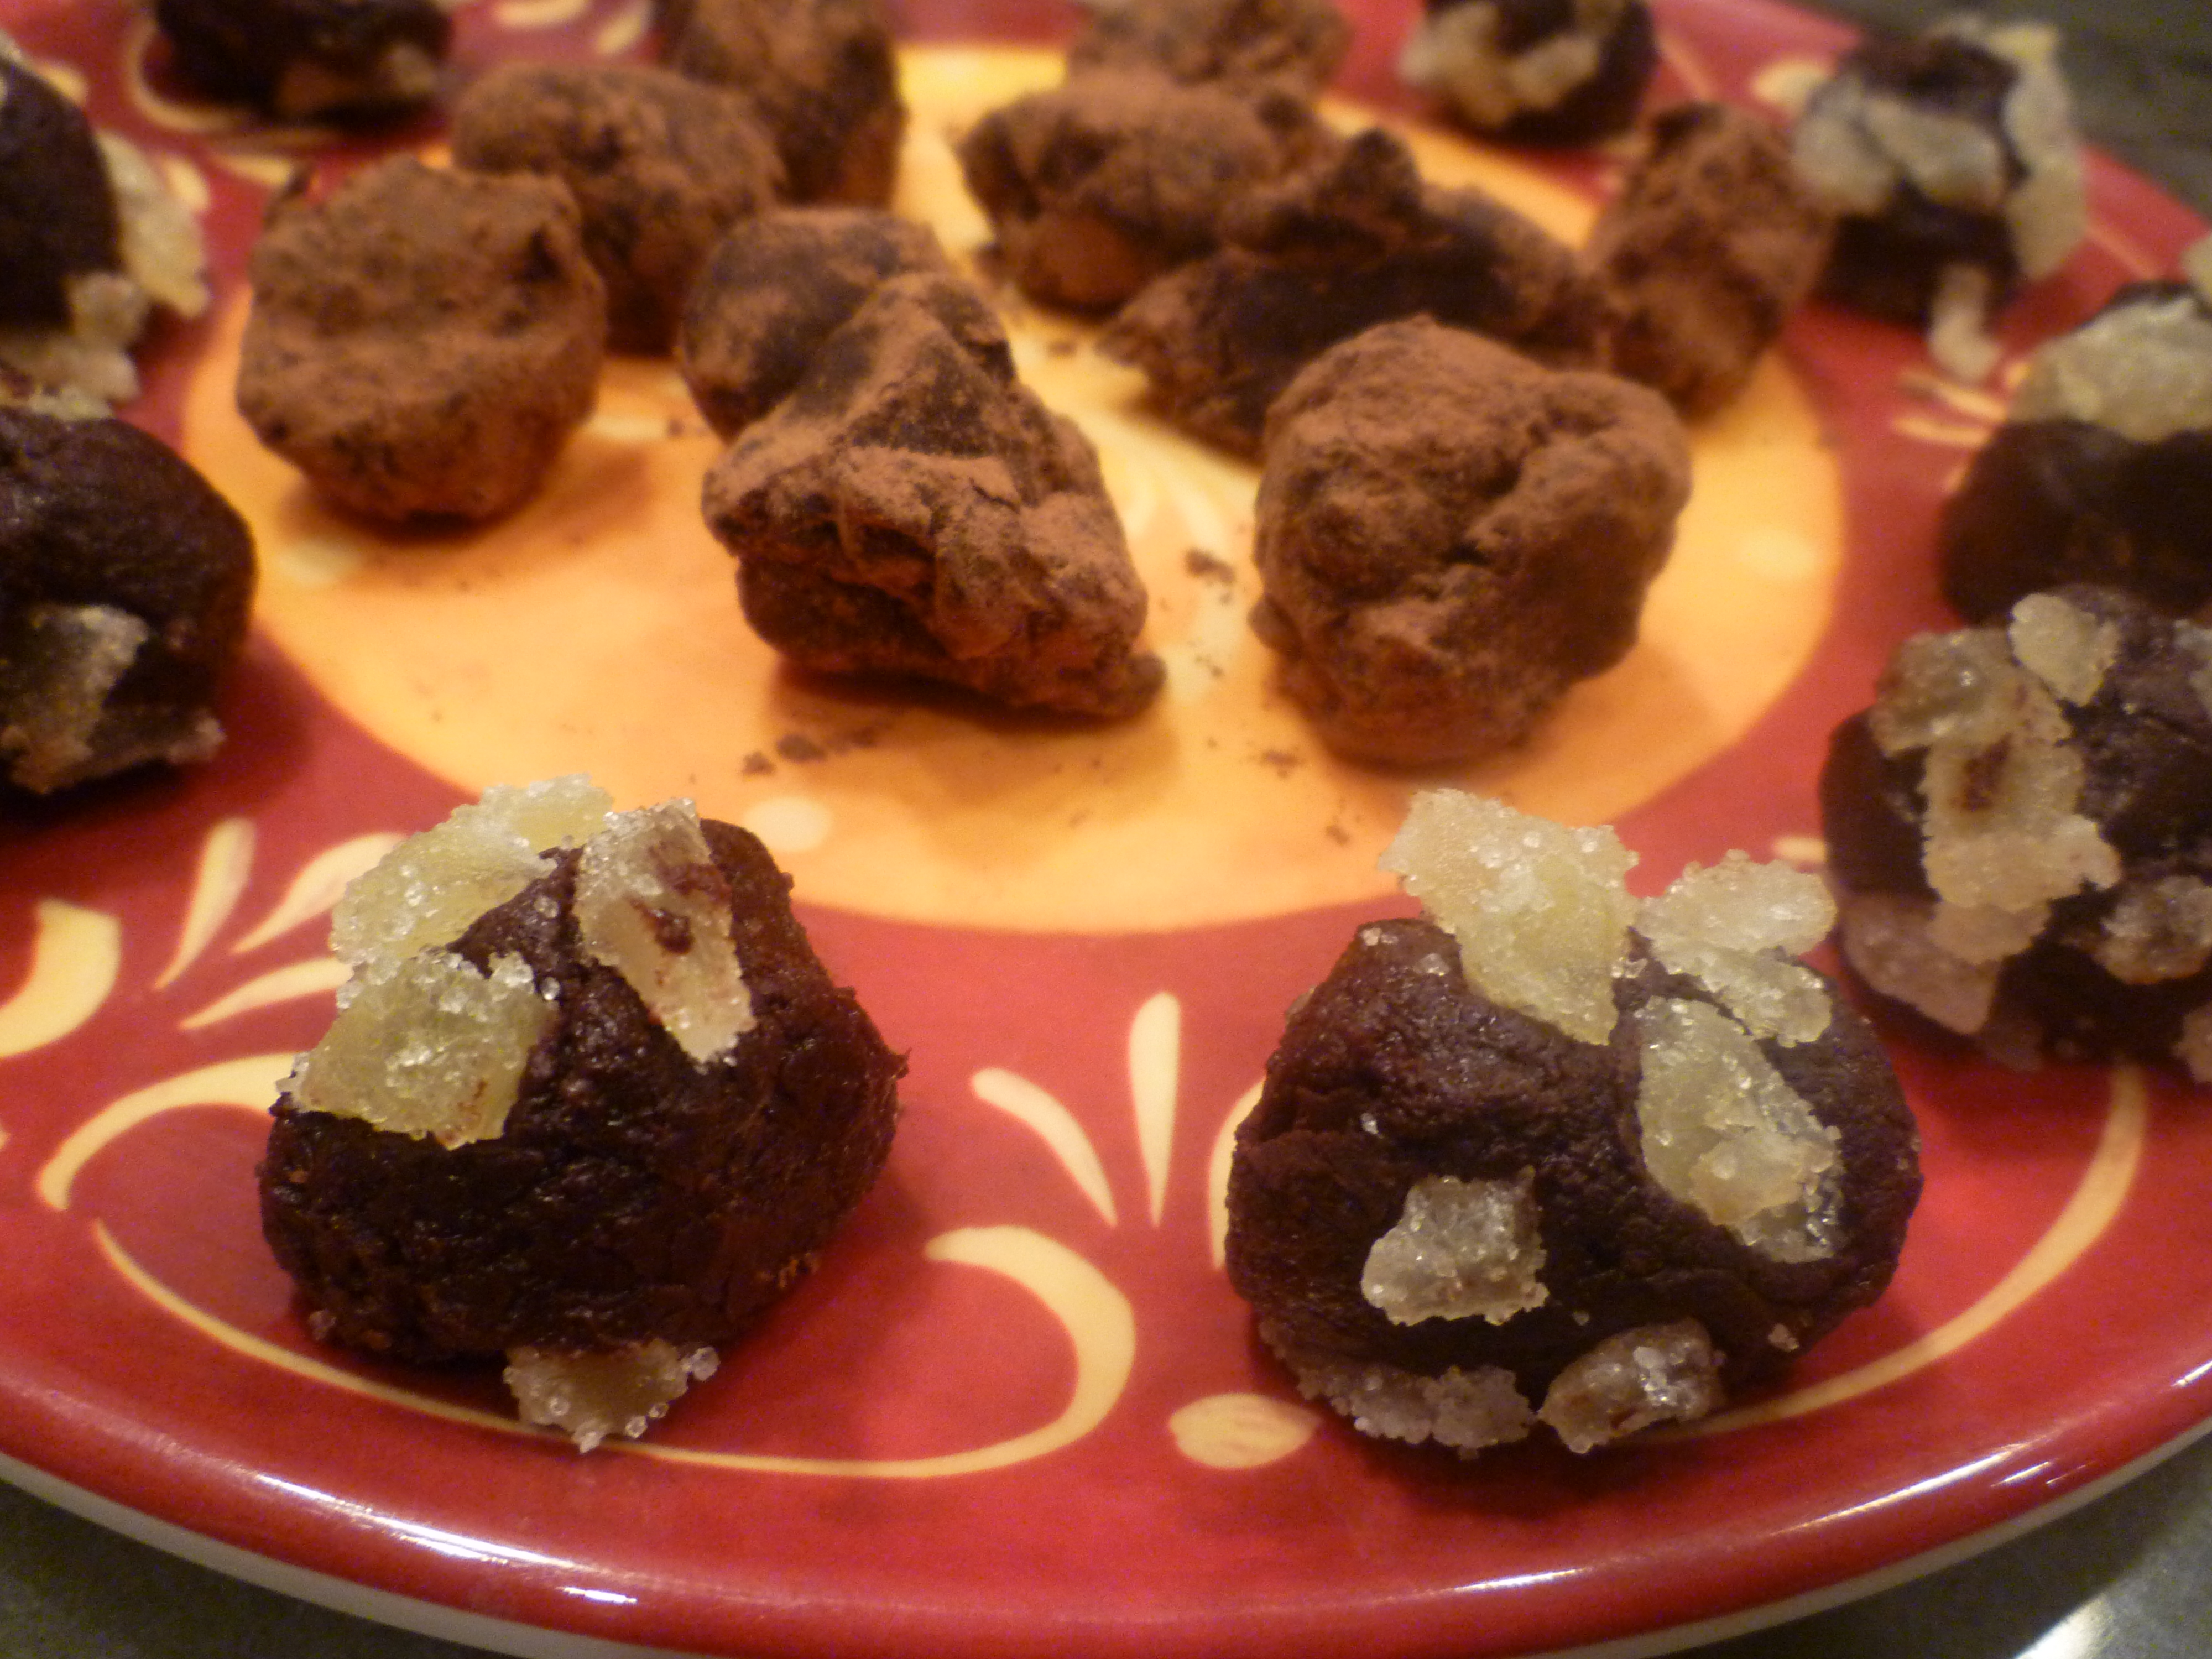 Homemade Edible Gifts - Chocolate Truffles 1 